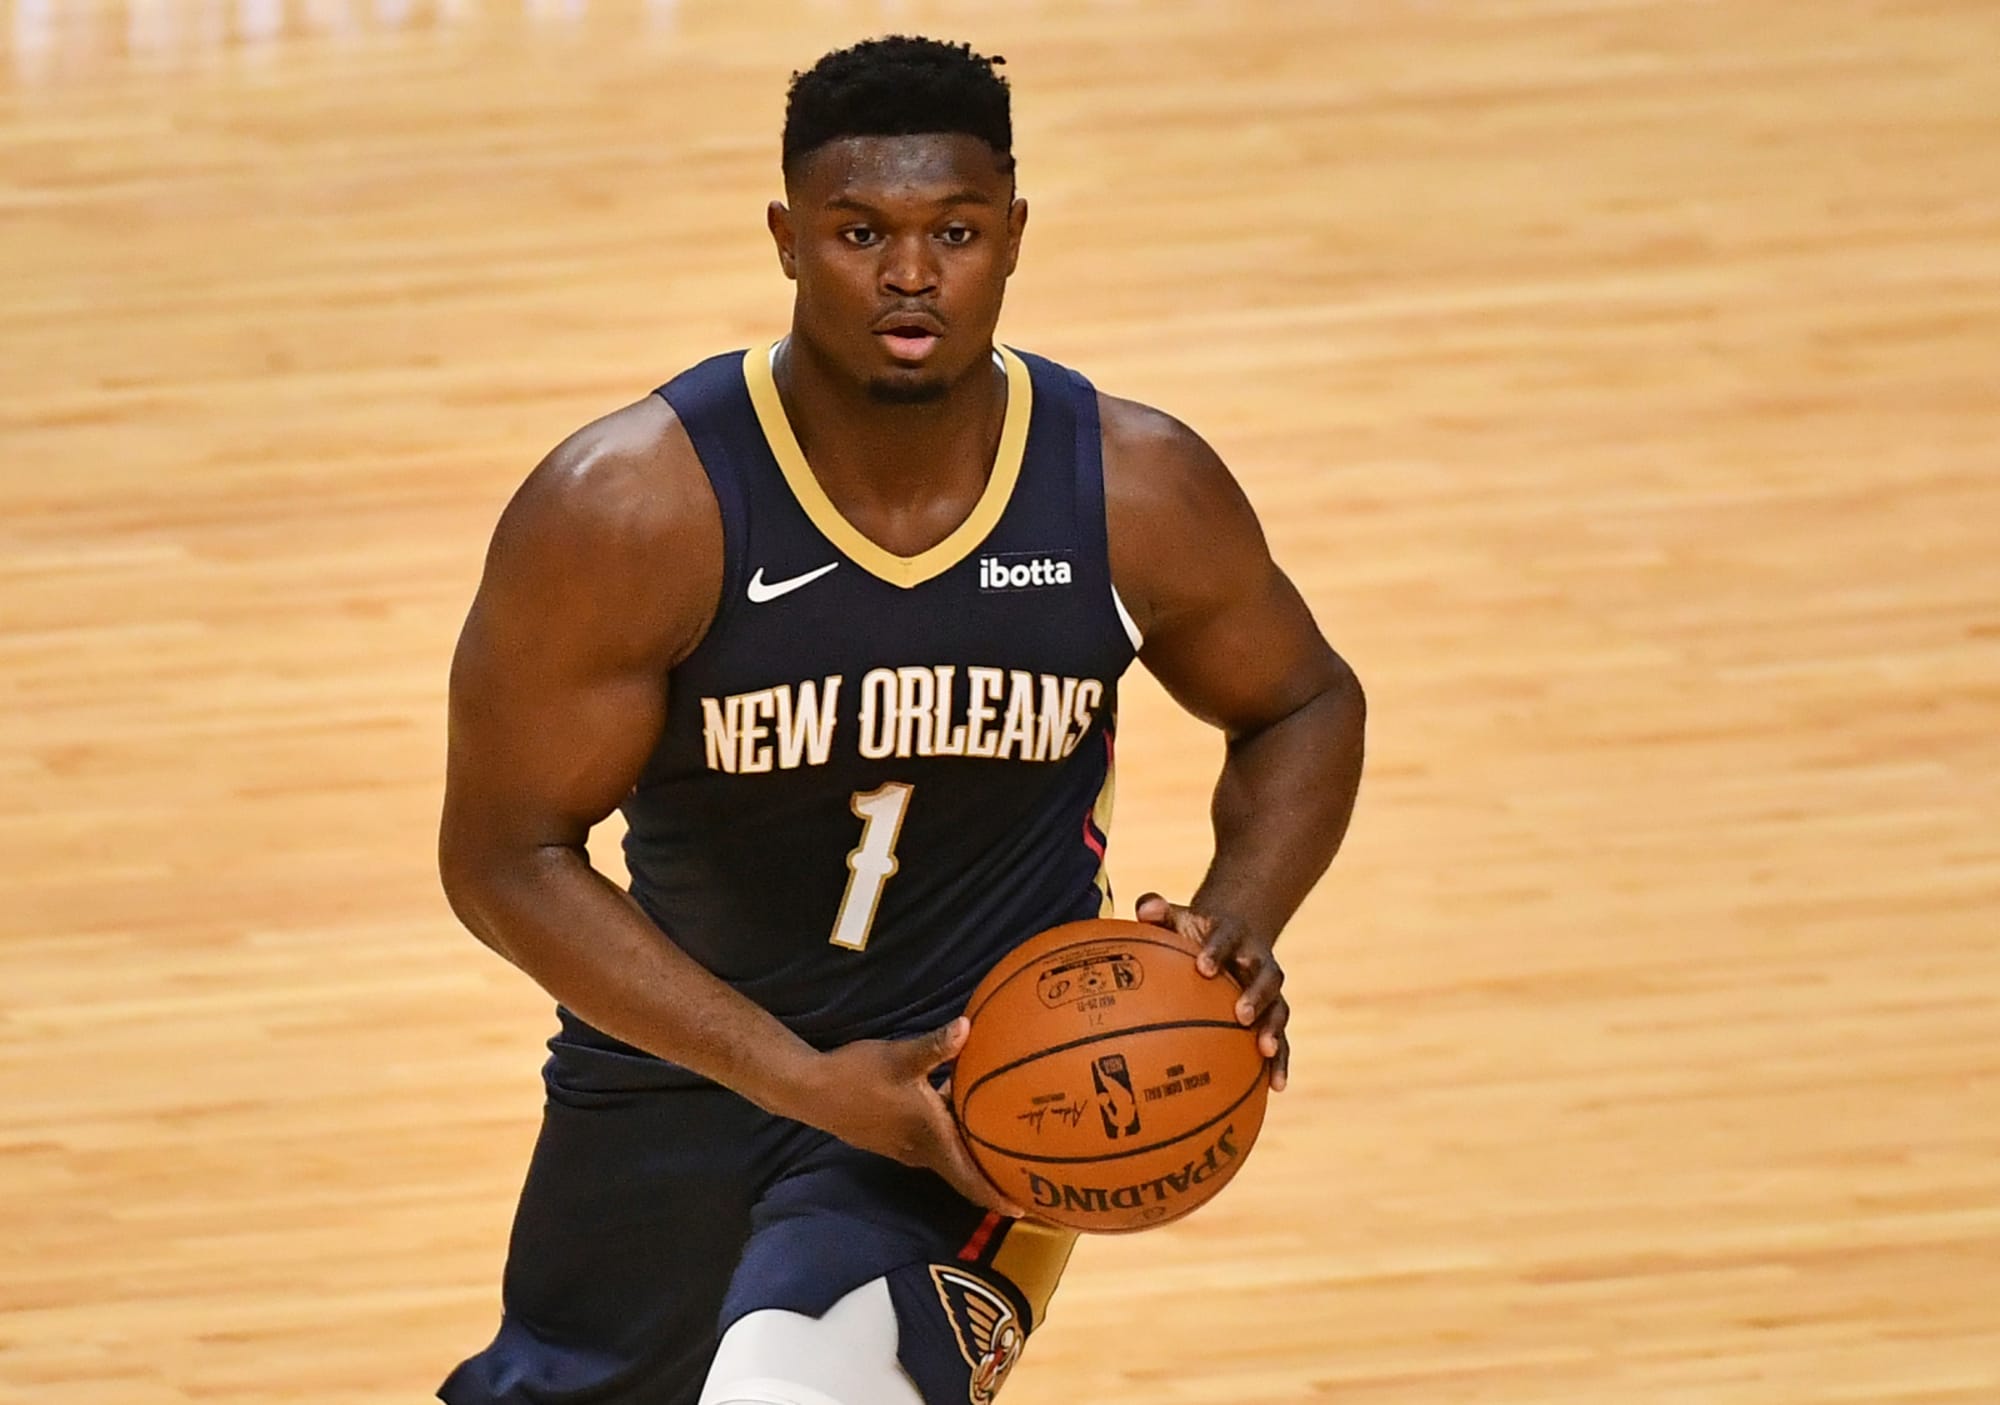 Zion Williamson will represent the - New Orleans Pelicans